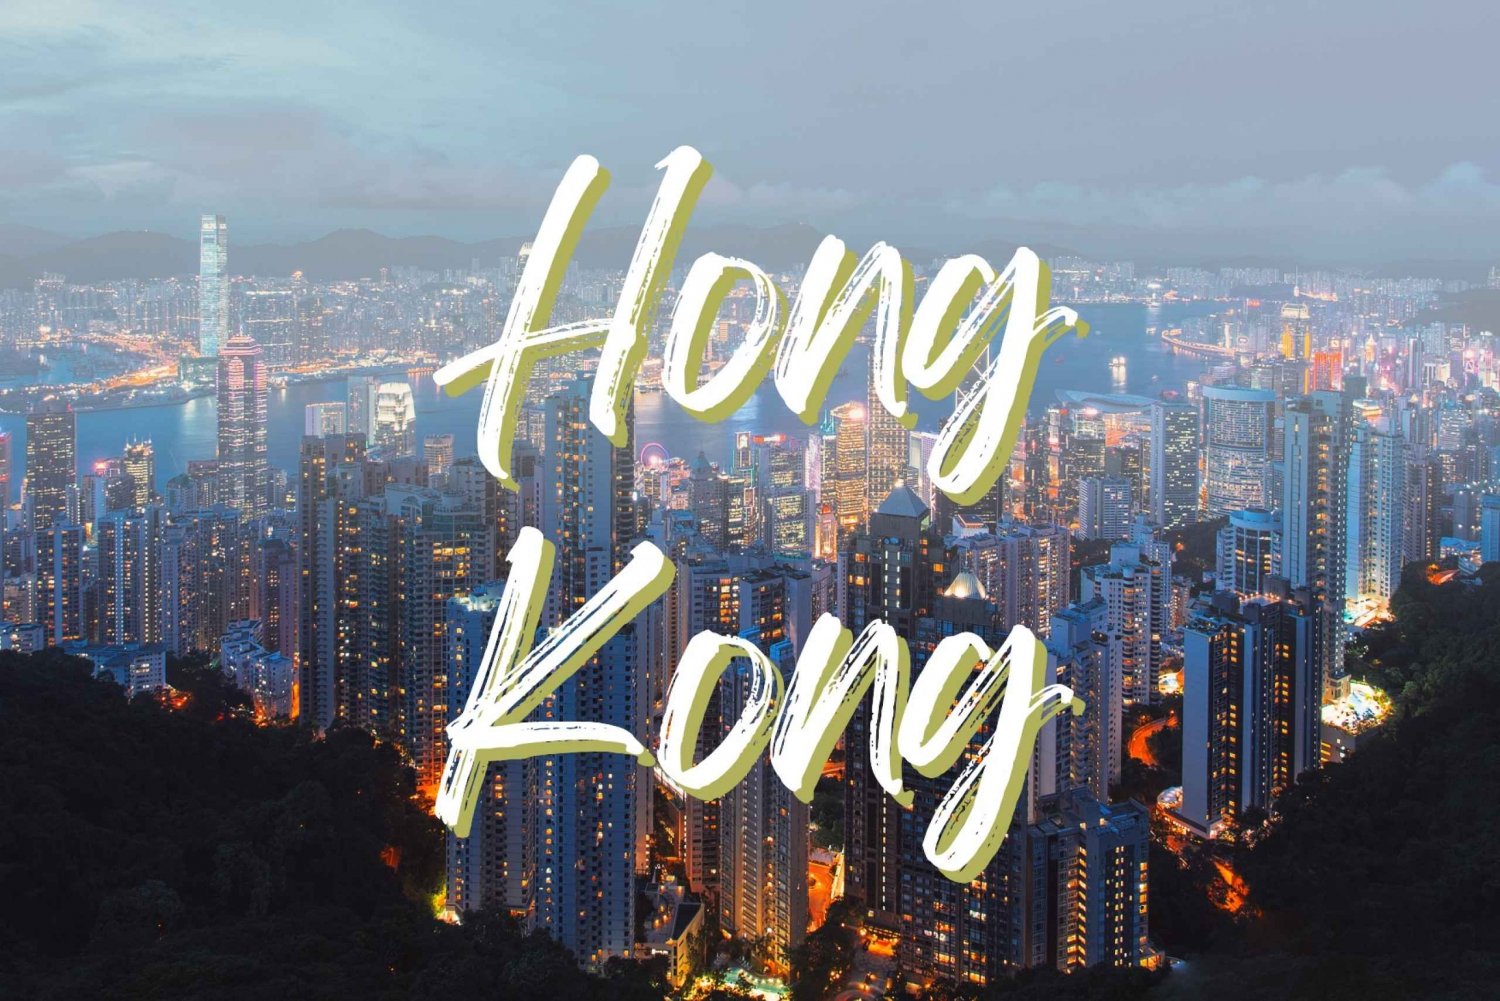 Hongkong-pakke 1: Med gratis byrundtur